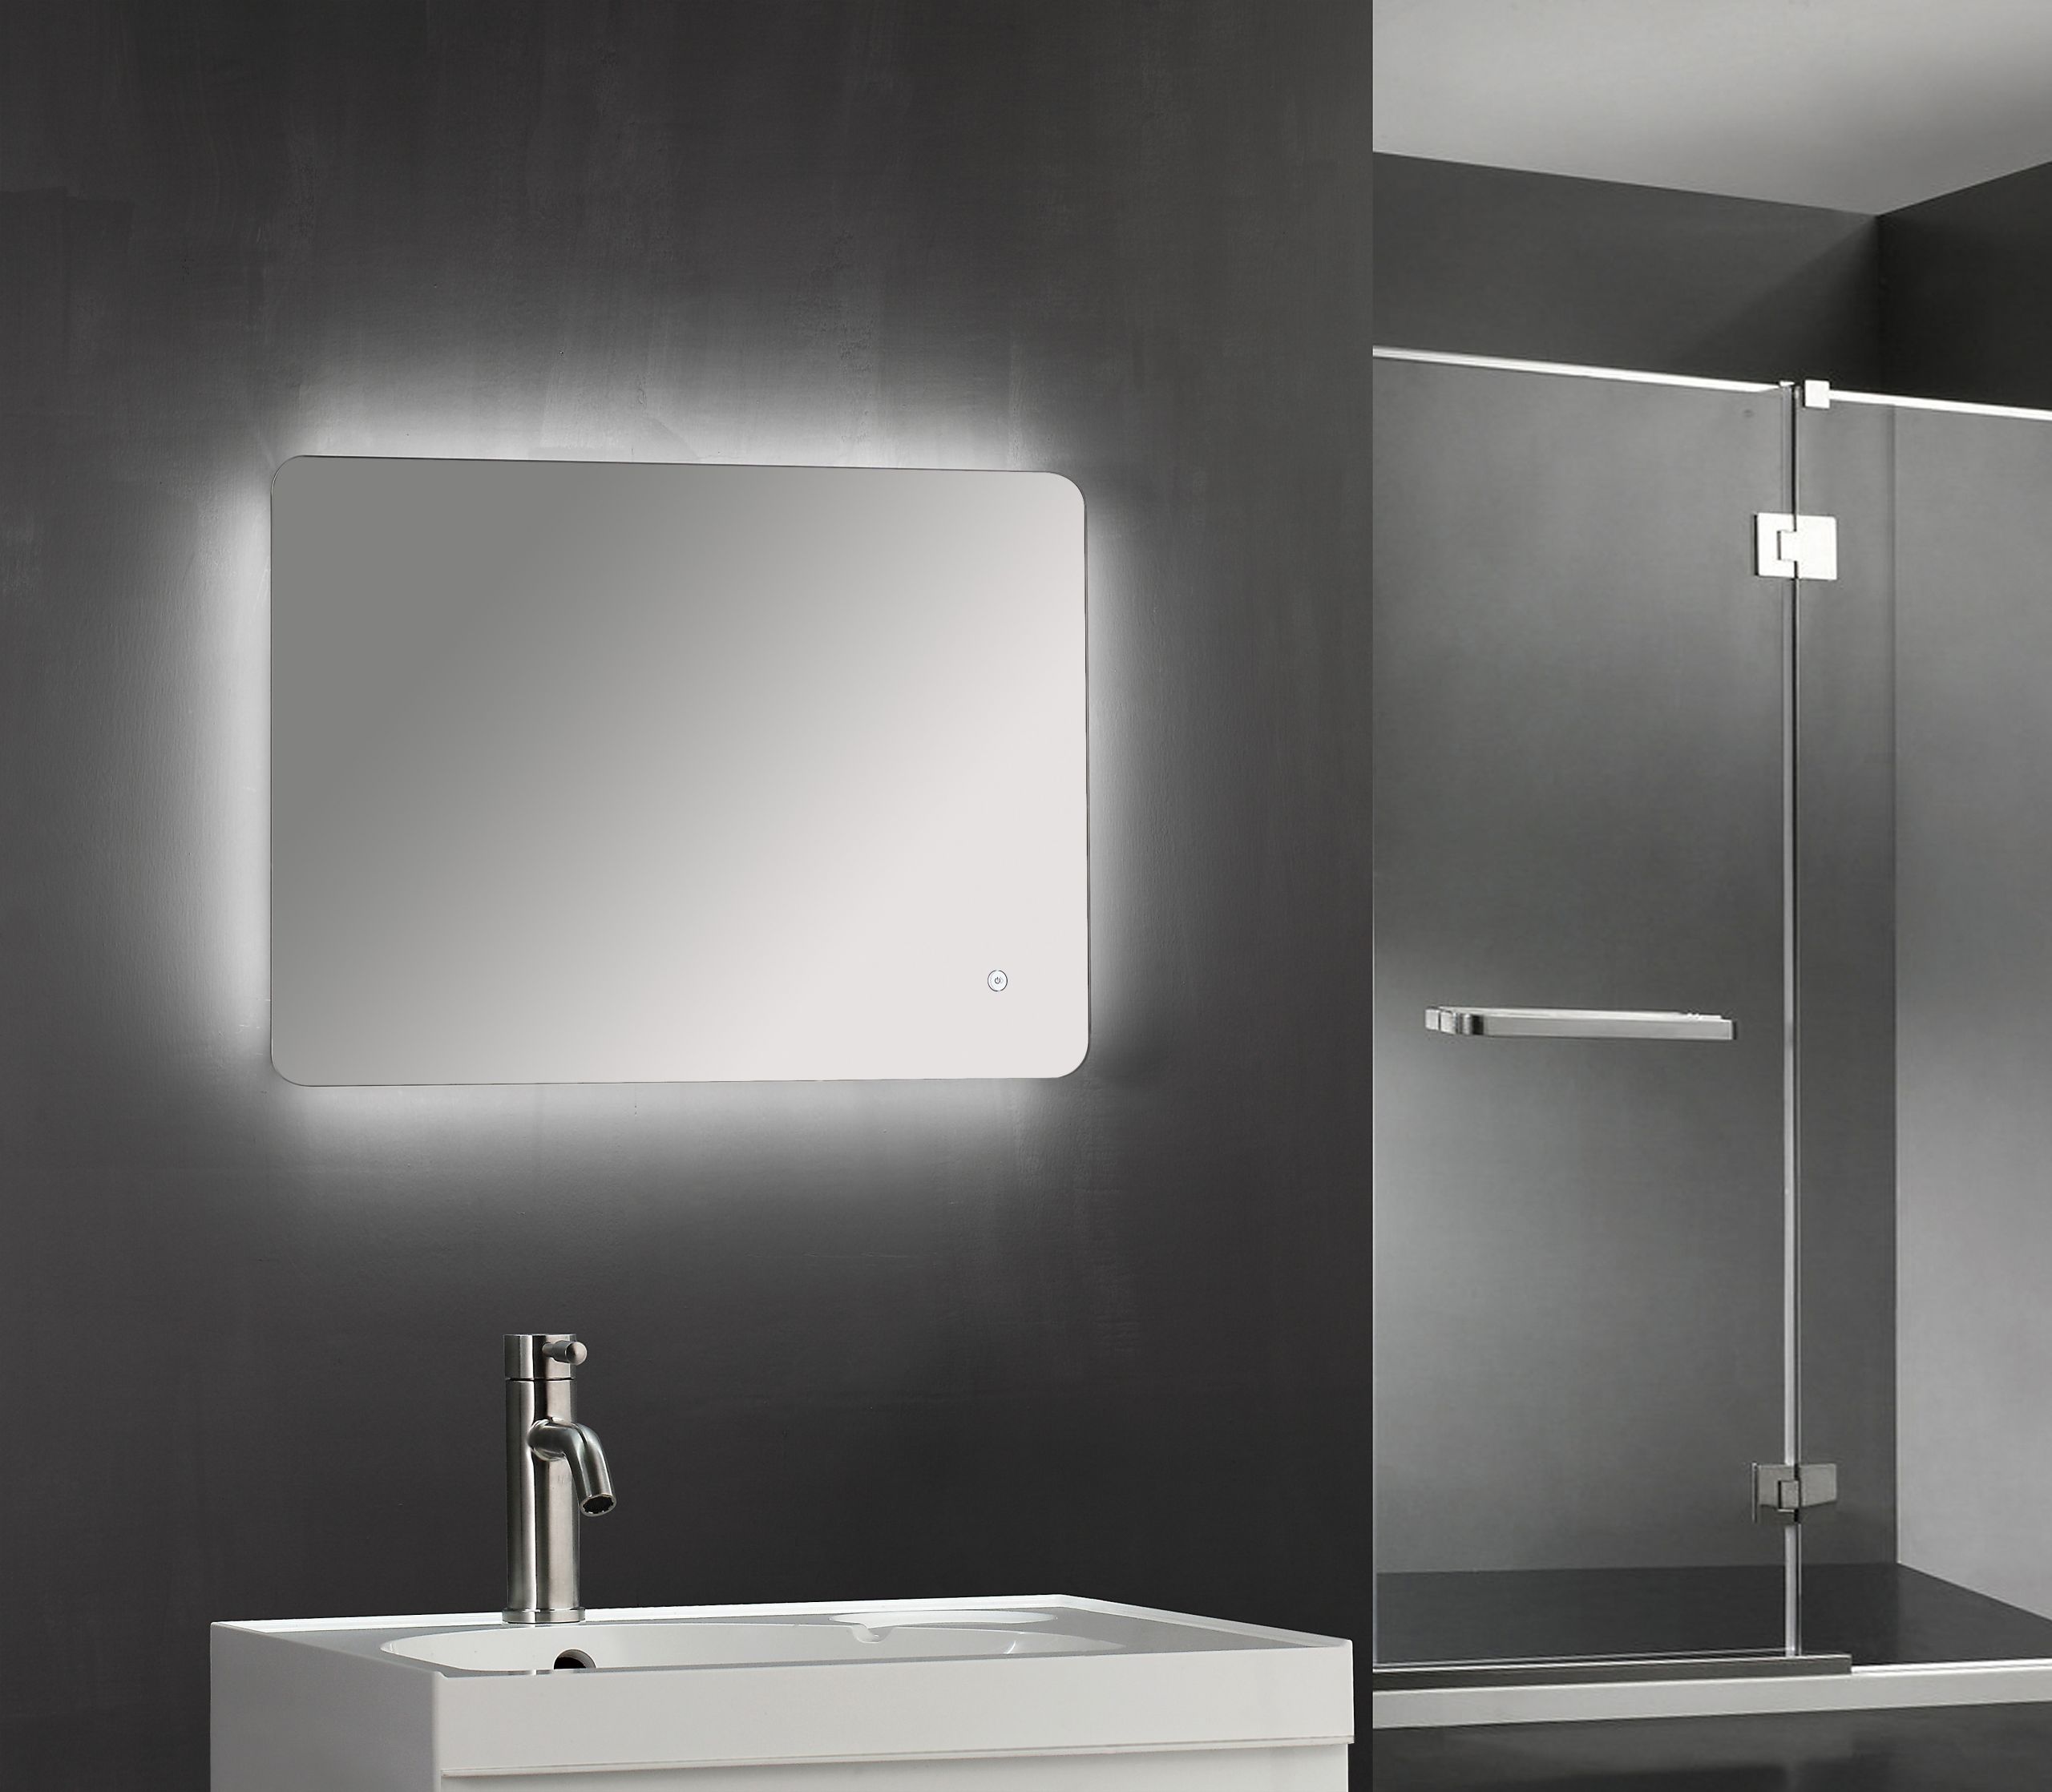 Lit Bathroom Mirror
 500 x 700mm Backlit LED Illuminated Touch Bathroom Mirror